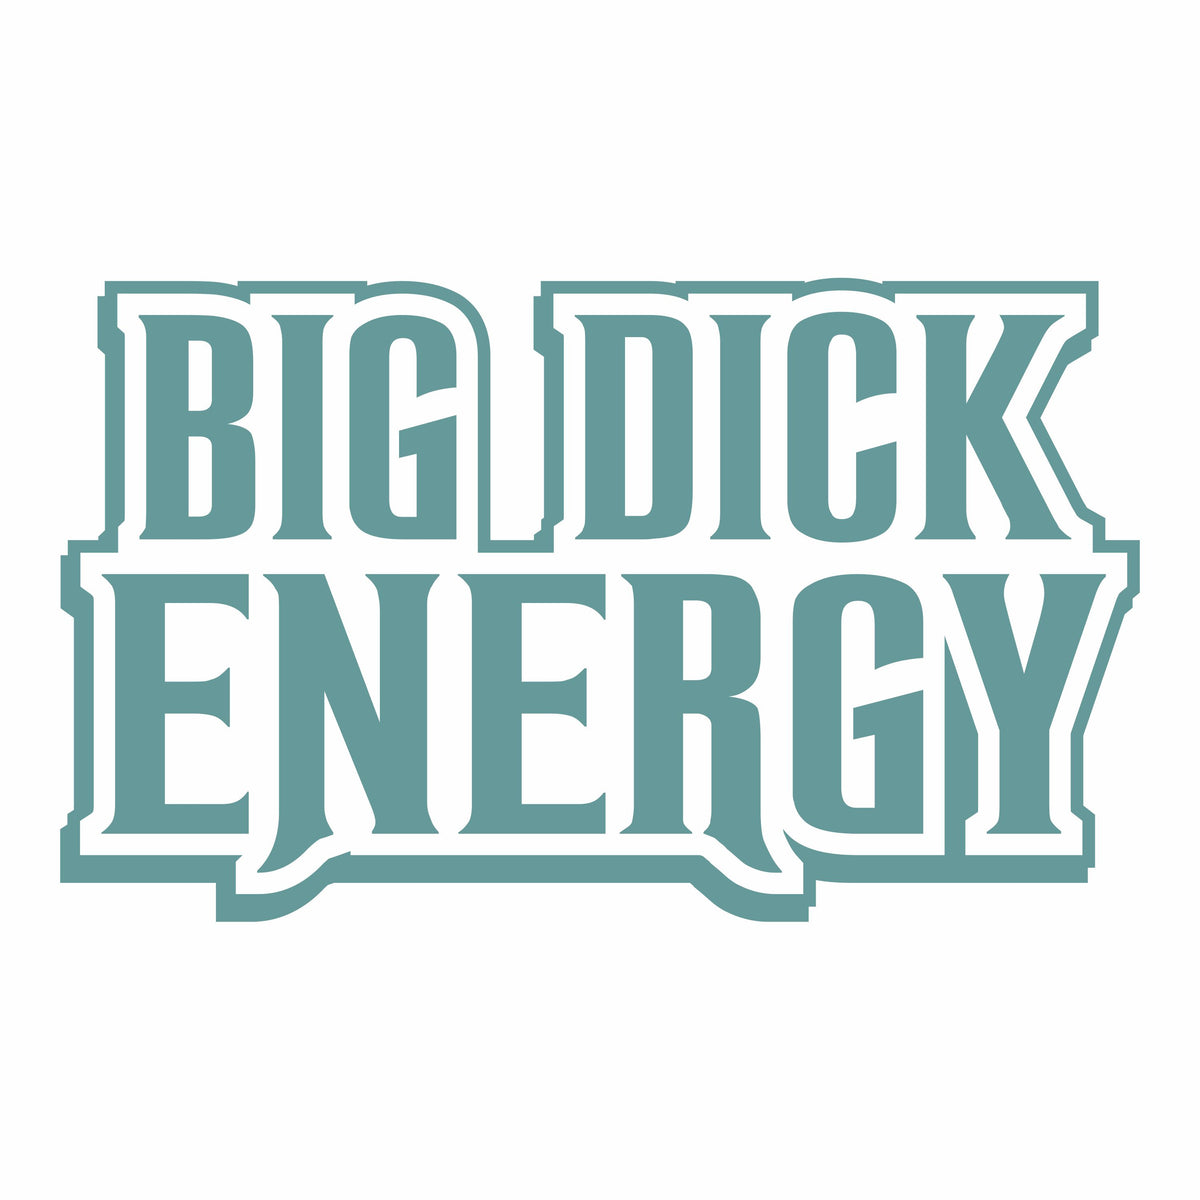 Big Dick Energy - Vinyl Decal - Free Shipping